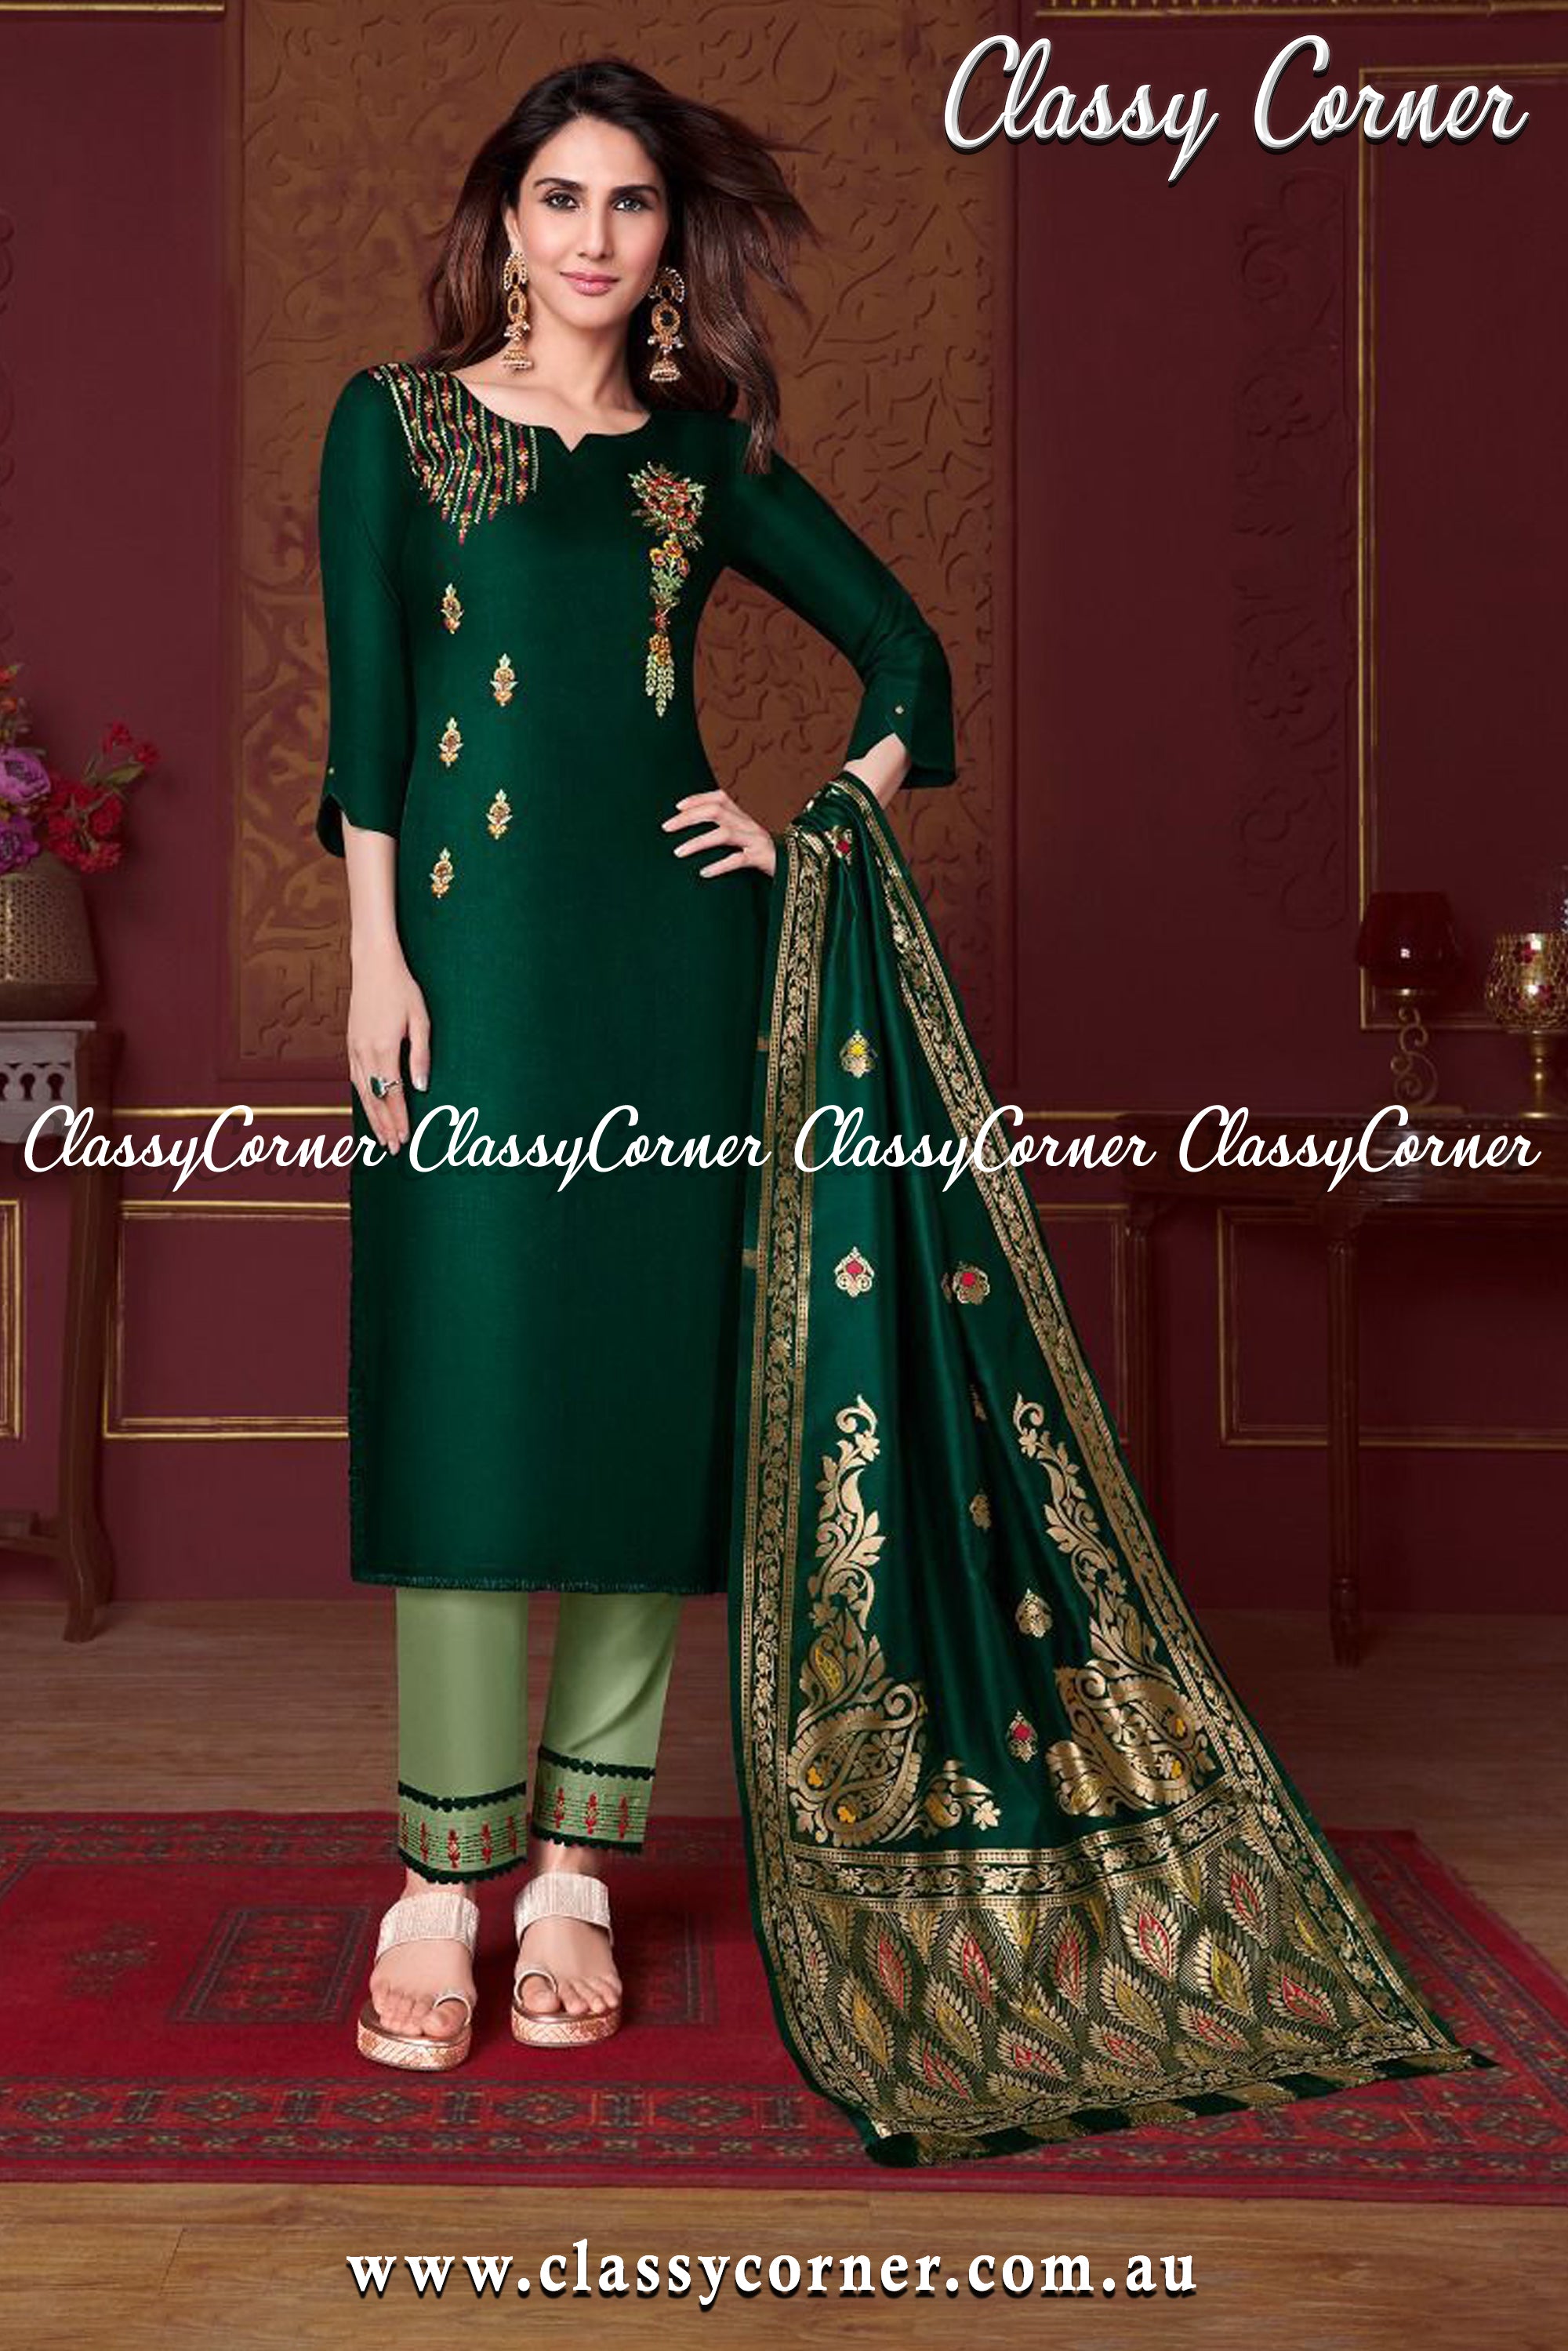 Bottle Light Green Viscose Indian Women Suit - Classy Corner